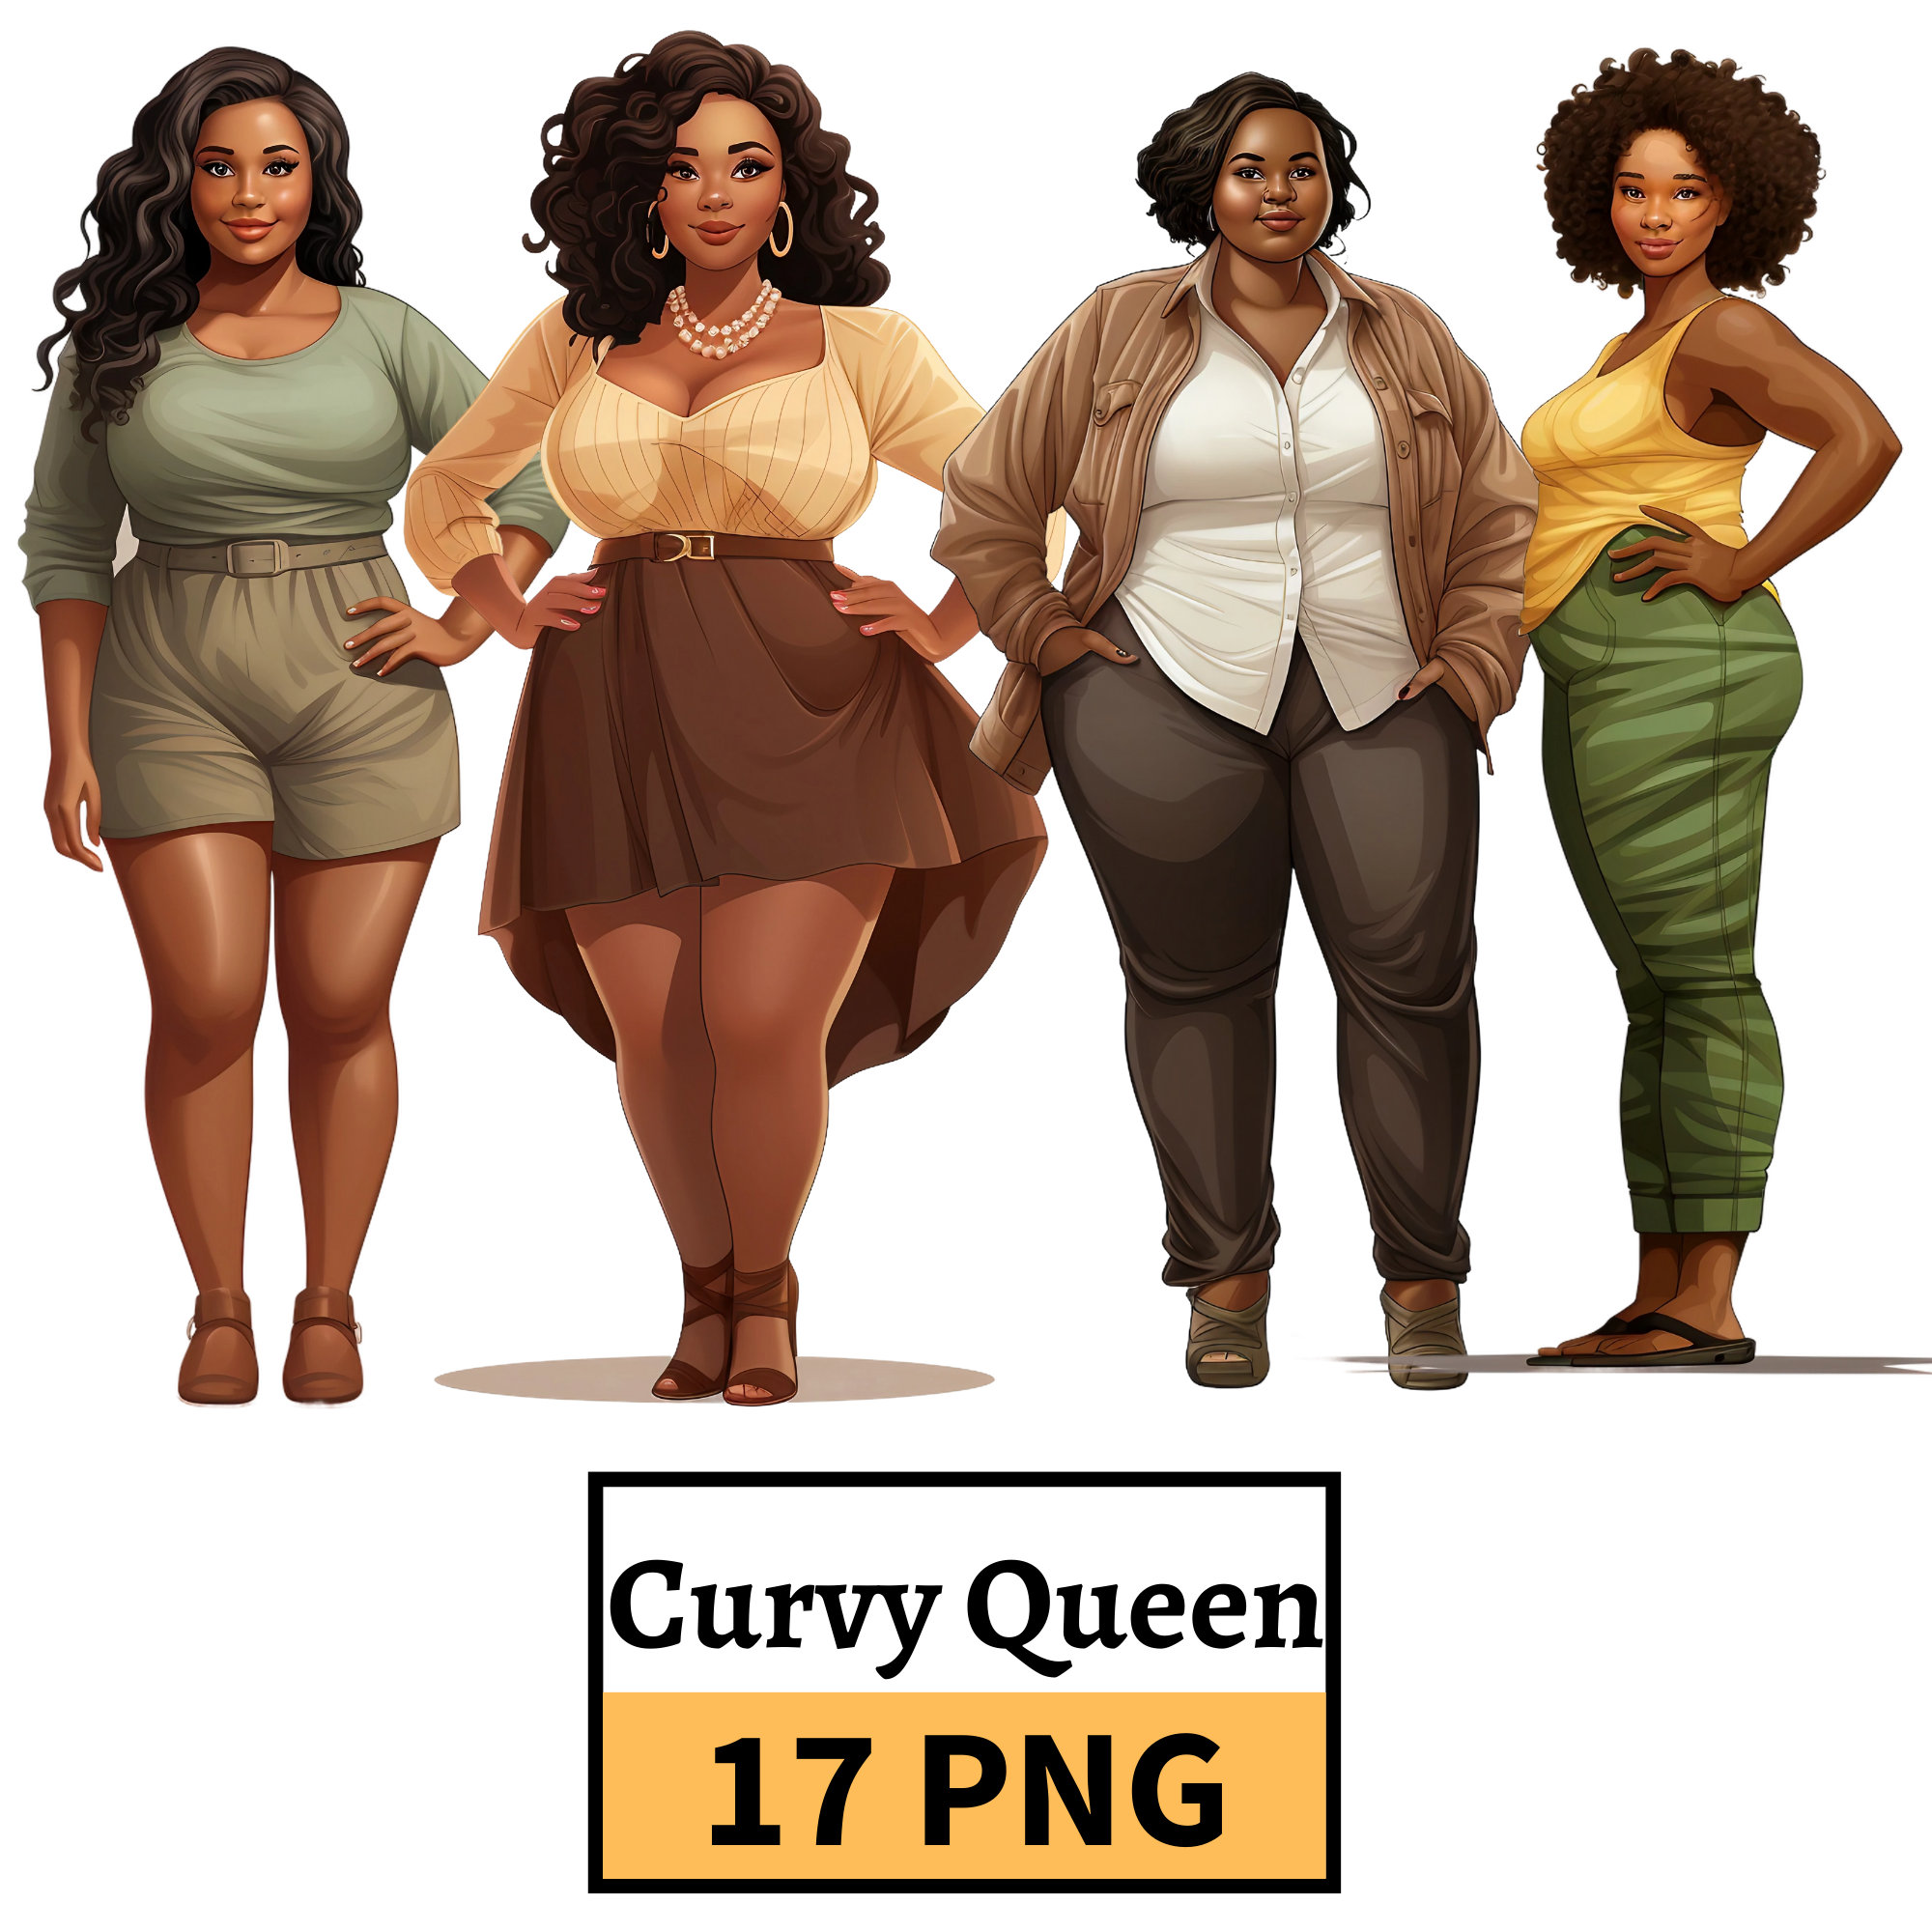 Curvy Girl Clipart, Curvy Beauty Clipart, African American Woman